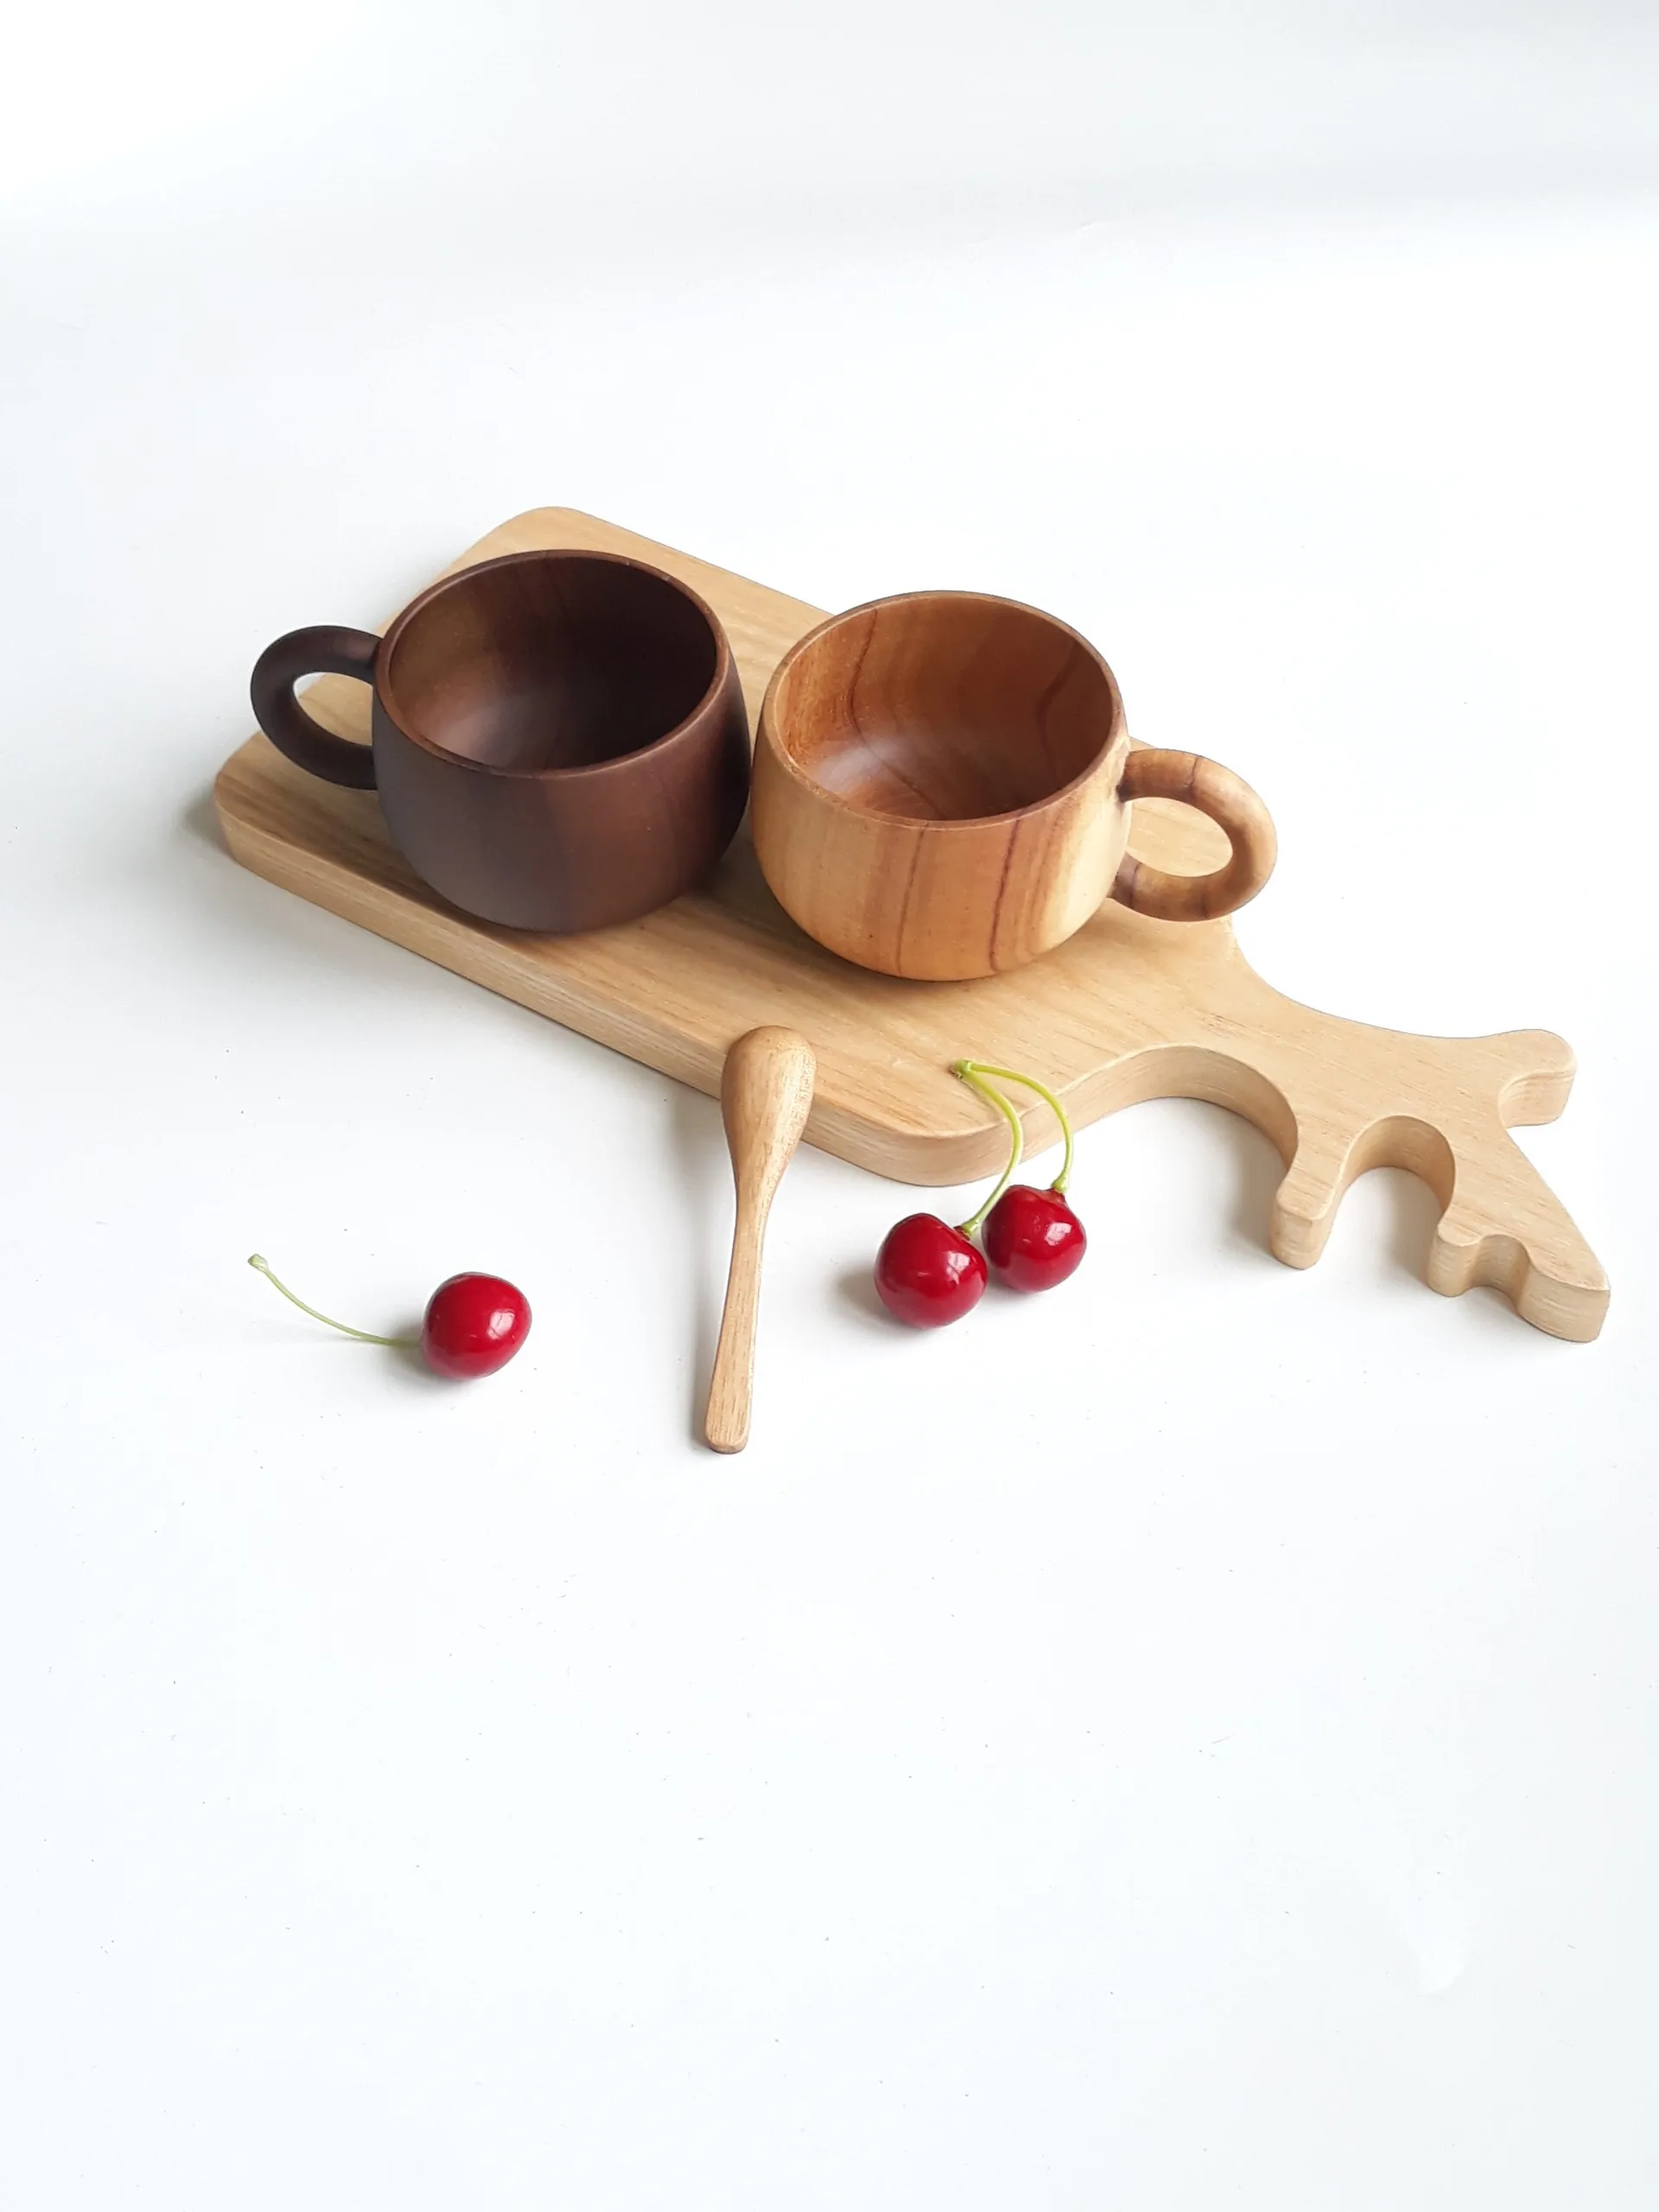 Water Cups Tea Cup Natural Wood Mug for Coffee Beer Tea Juice Milk 300ml GOTOTOP Wooden Cup #3 